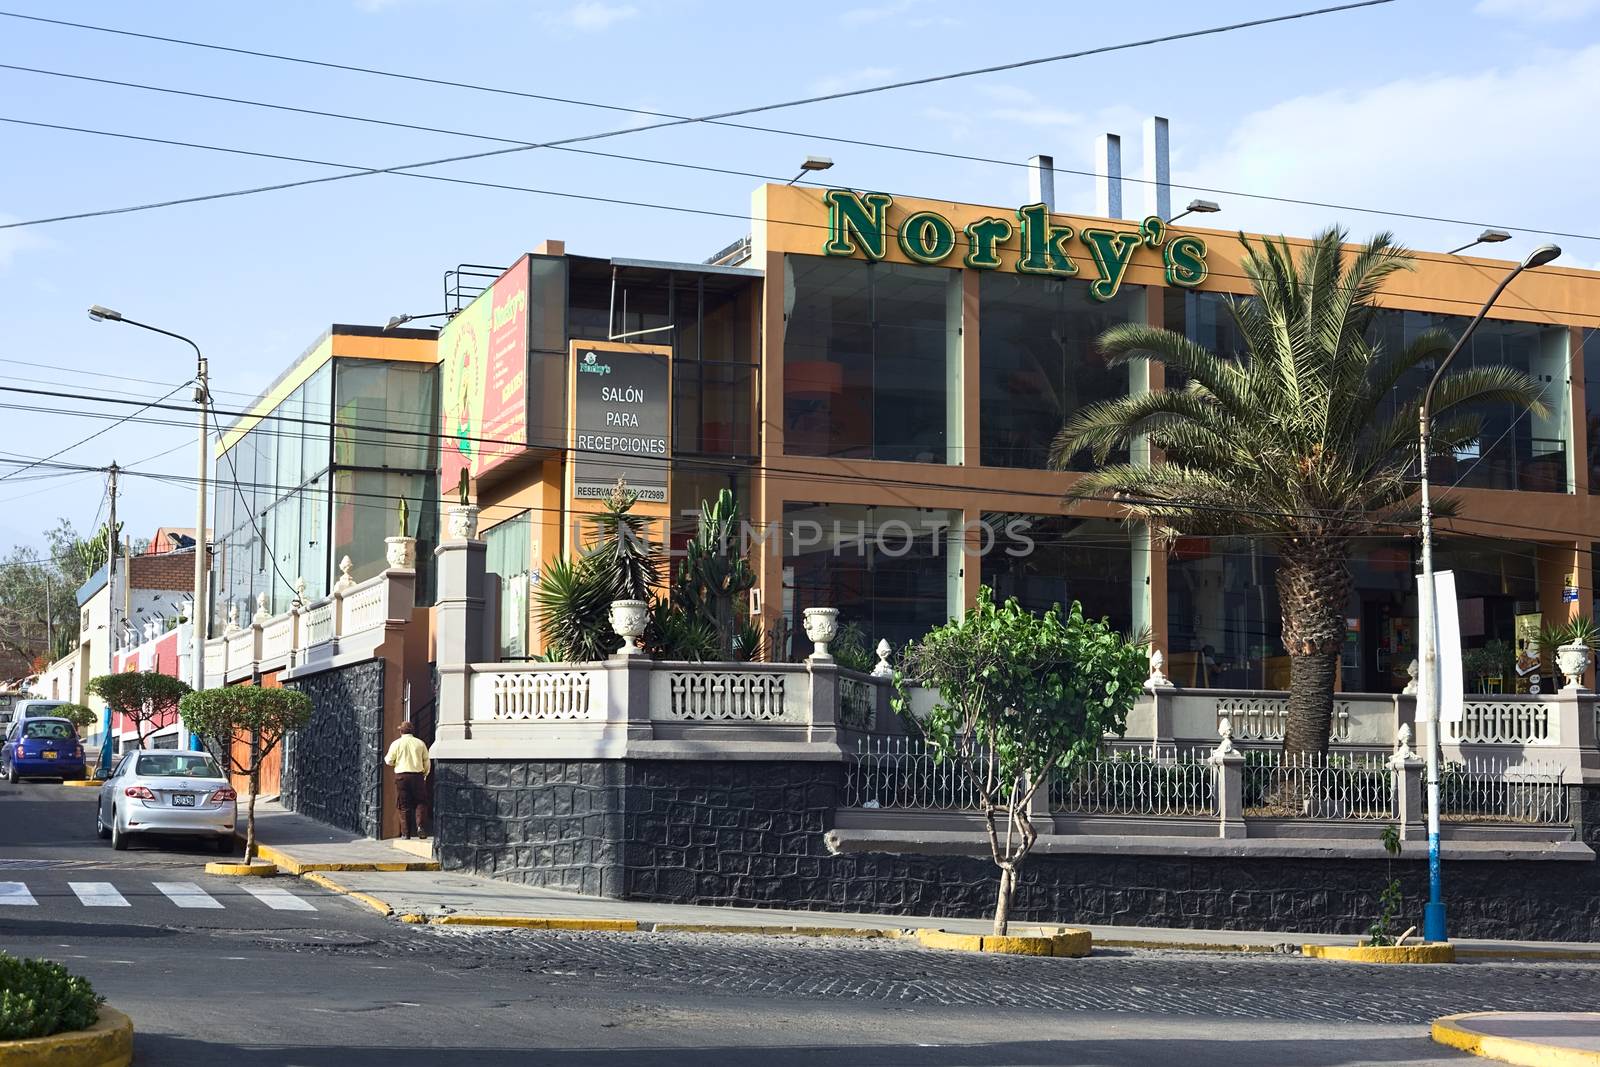 Norky's Roast Chicken Fast Food Restaurant in Arequipa, Peru by ildi